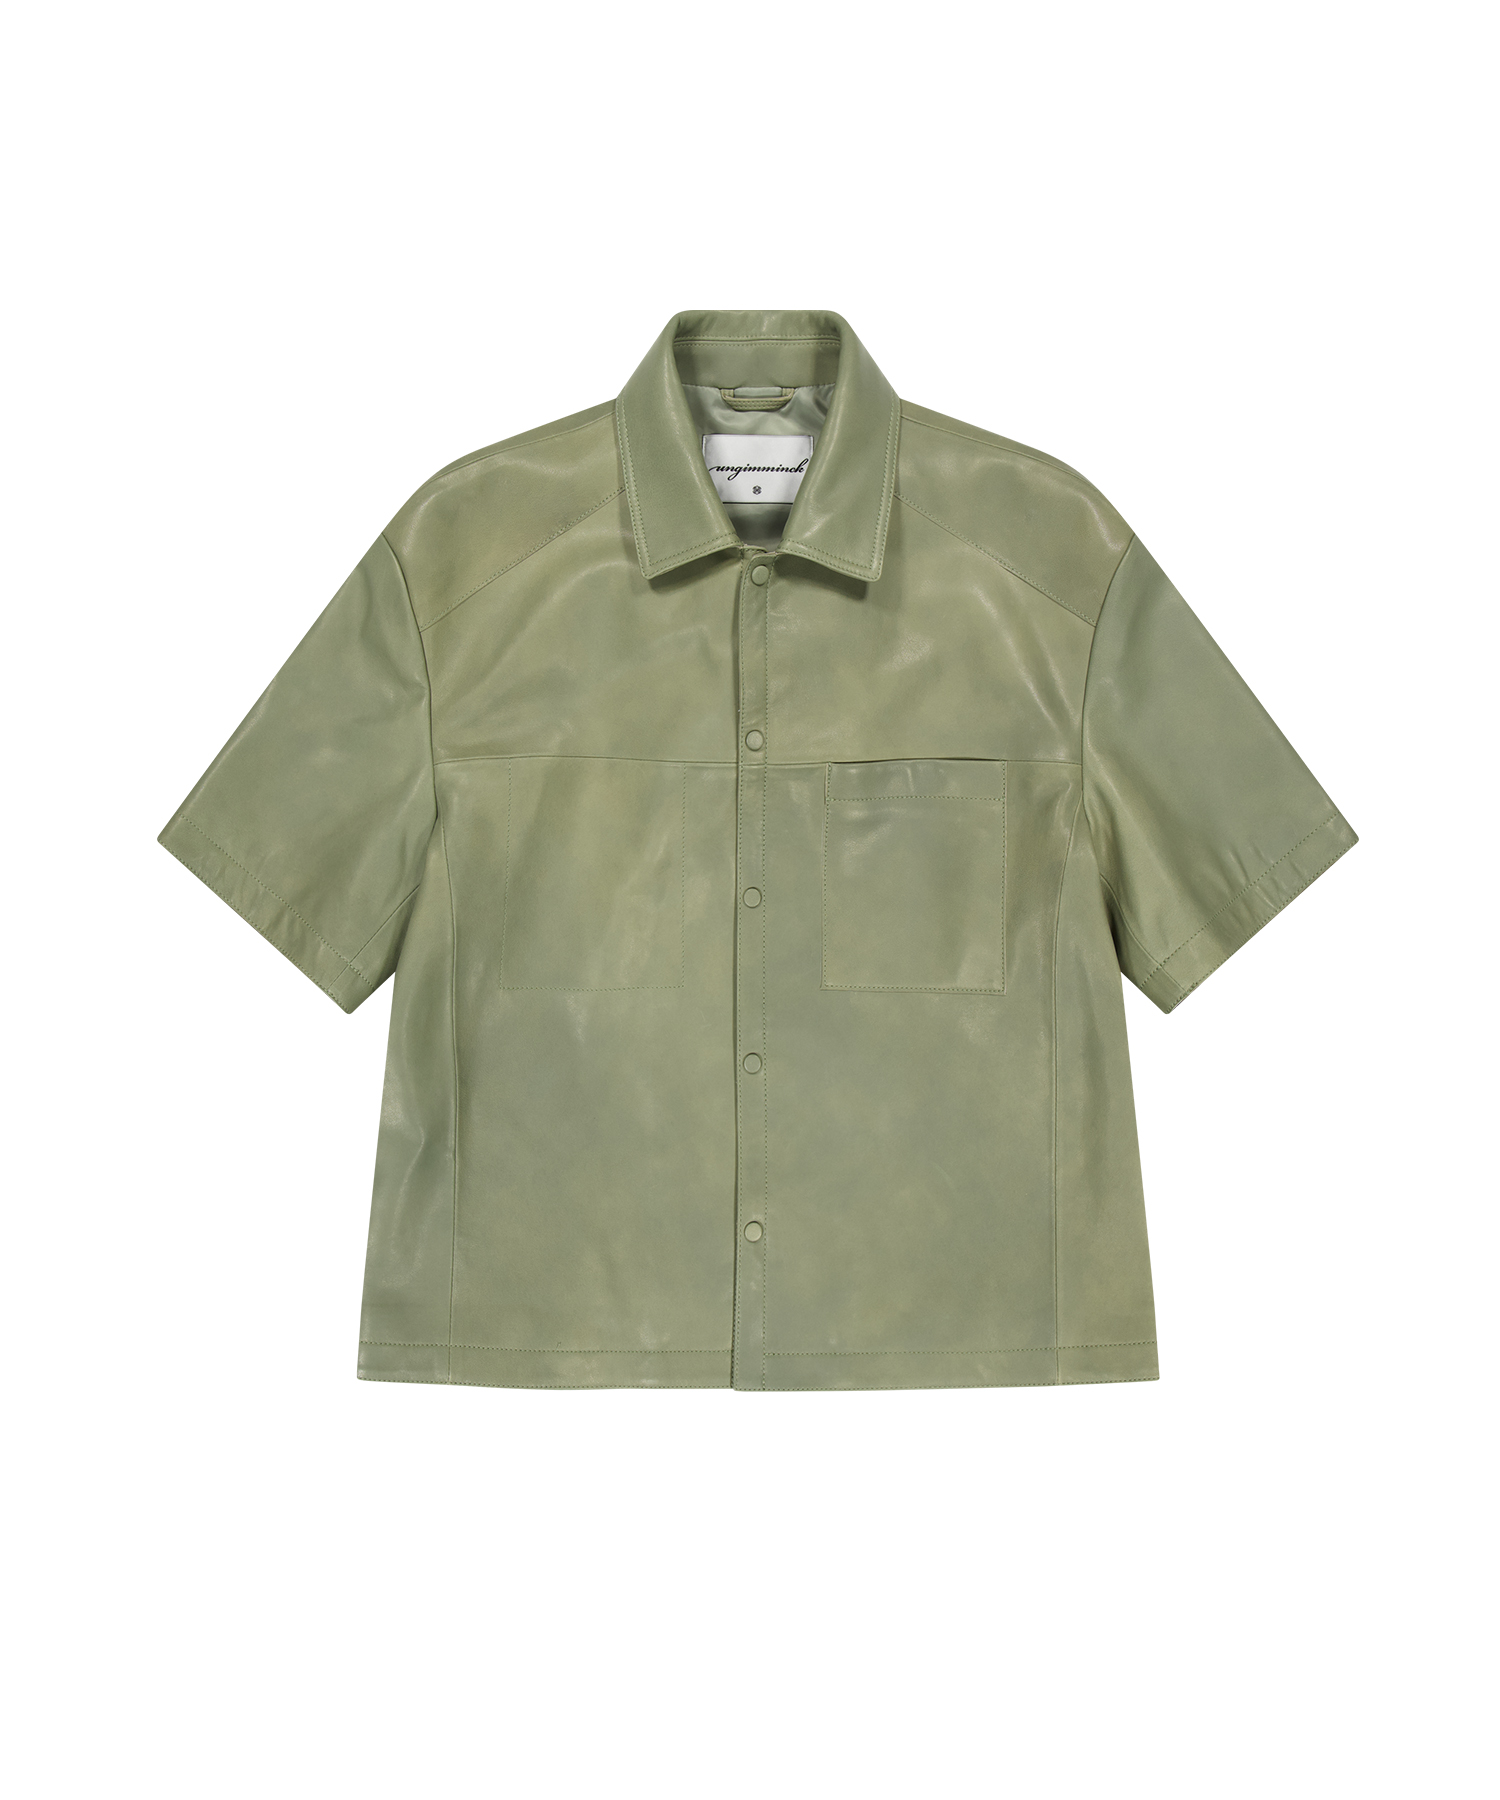 Lamb Skin Short Sleeve Shirt - Olive Green